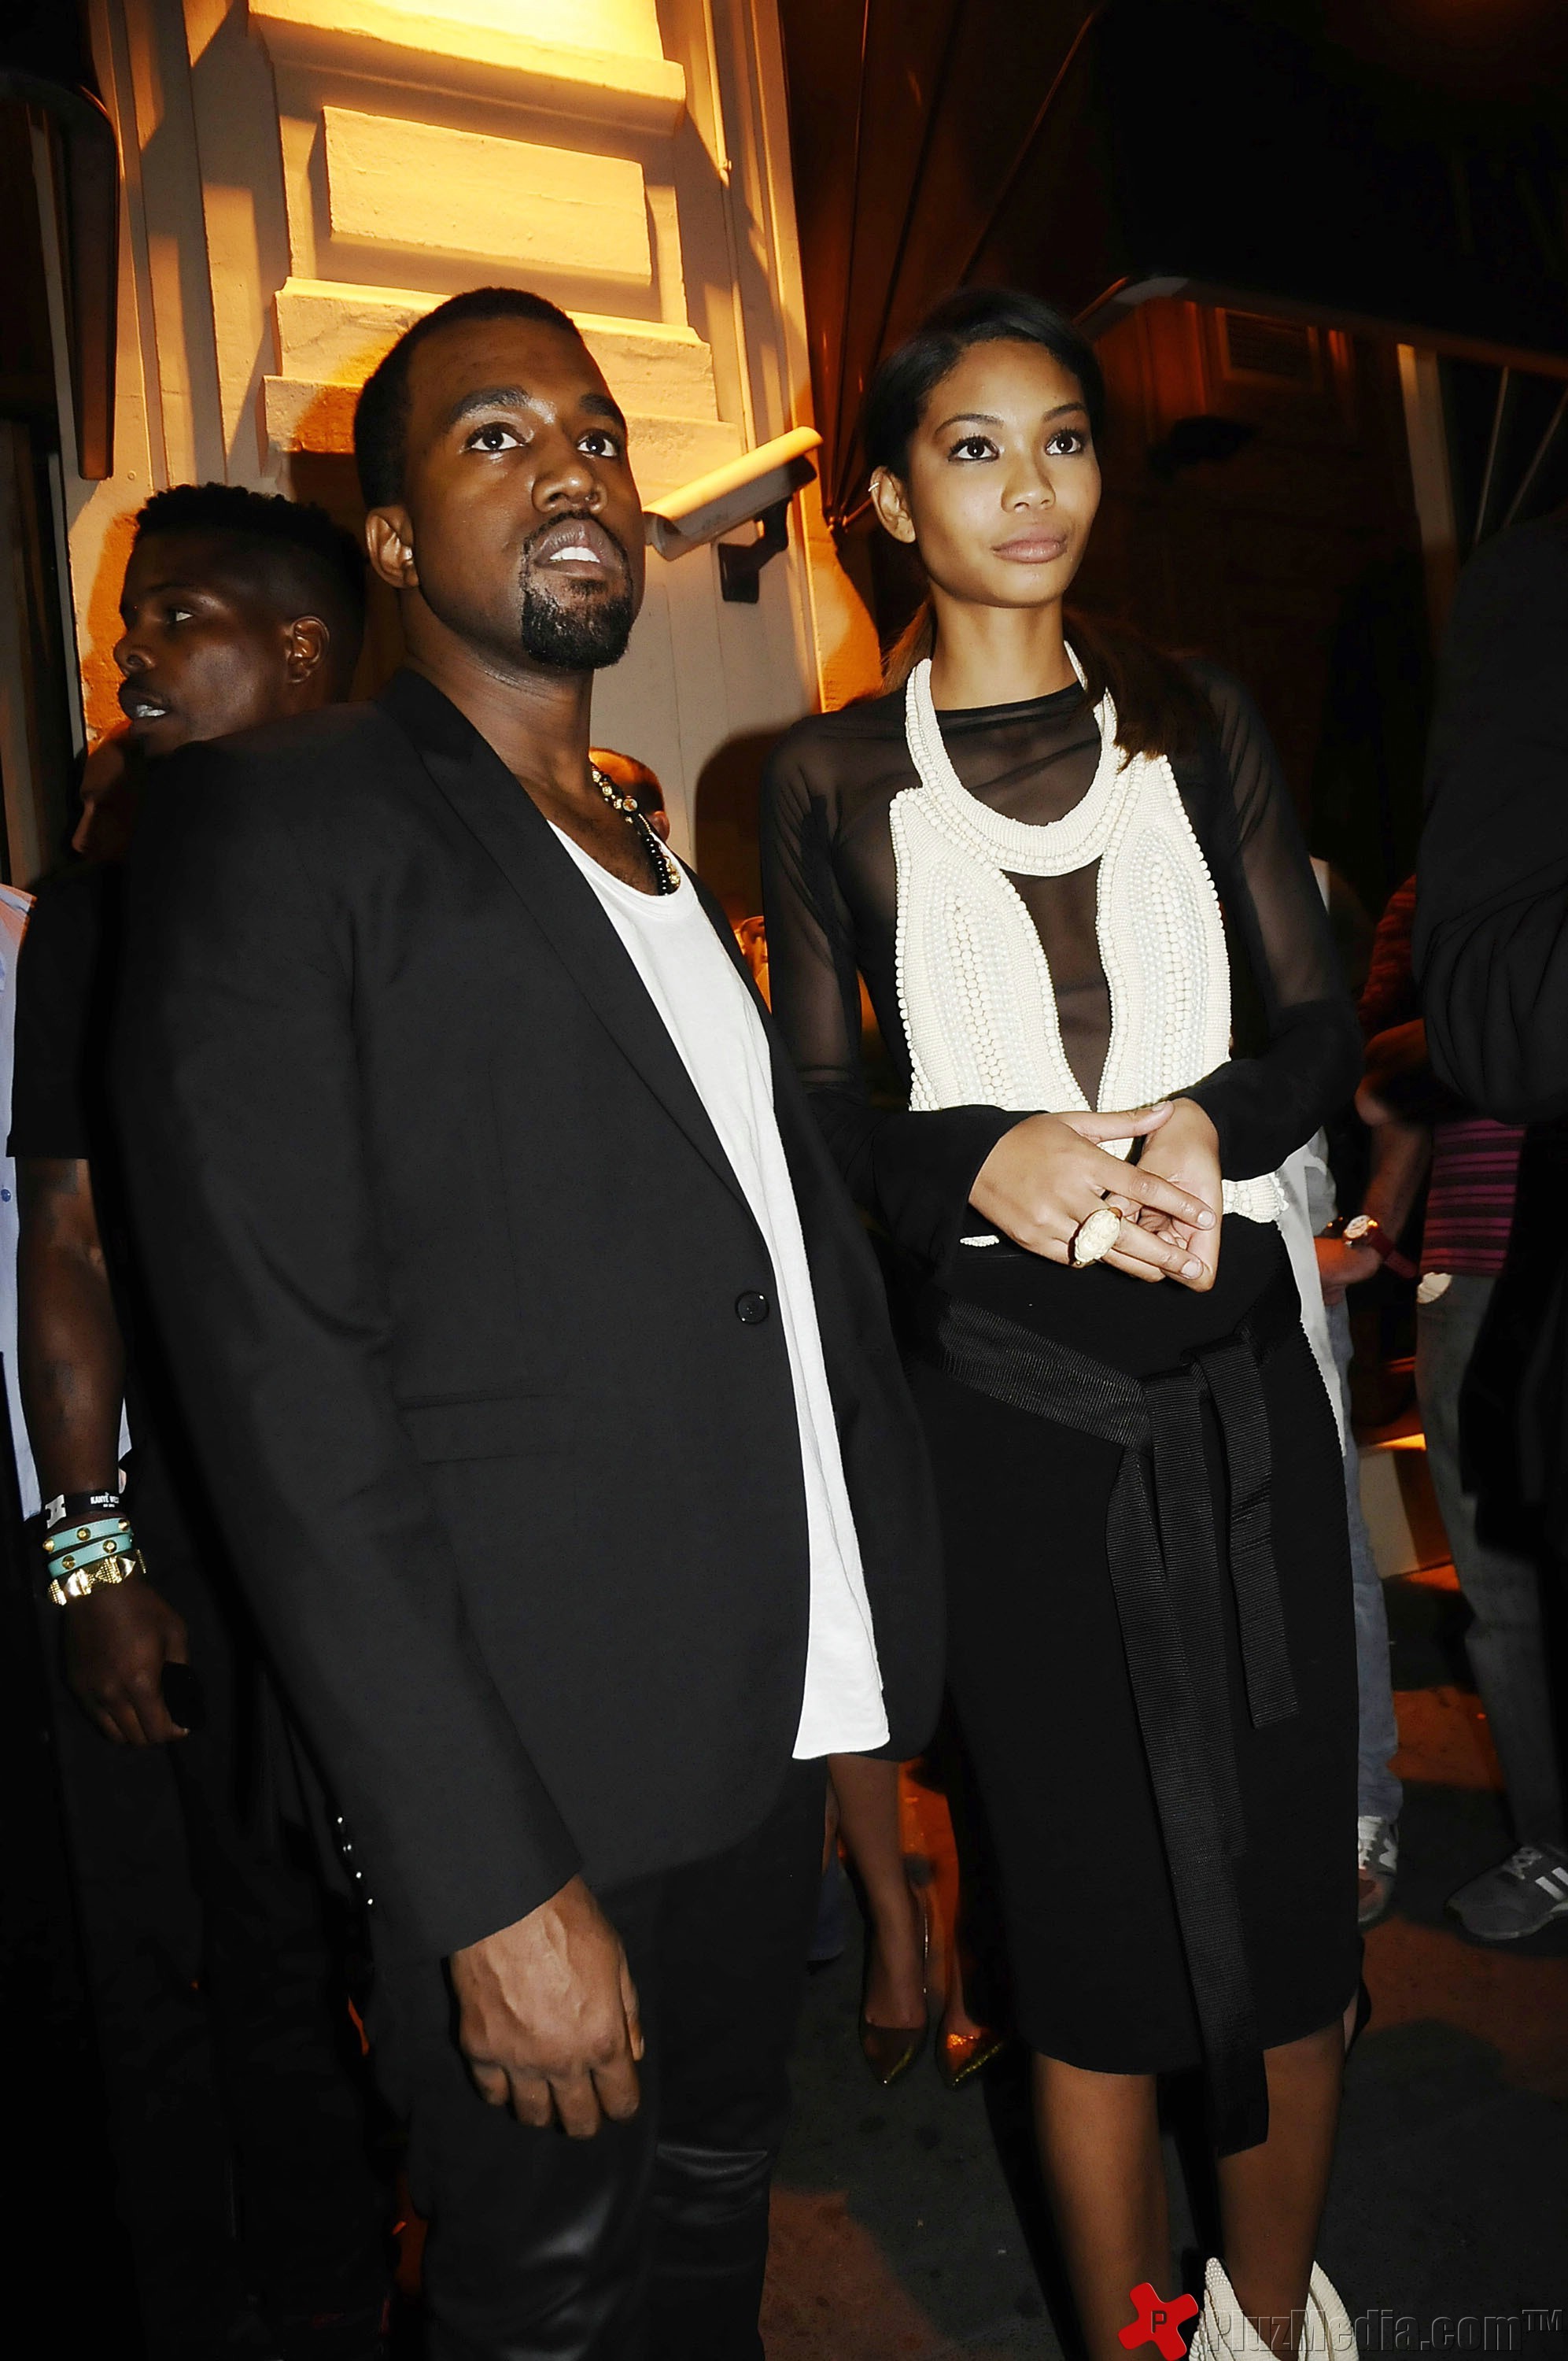 Chanel iman, Kanye west, Fashion